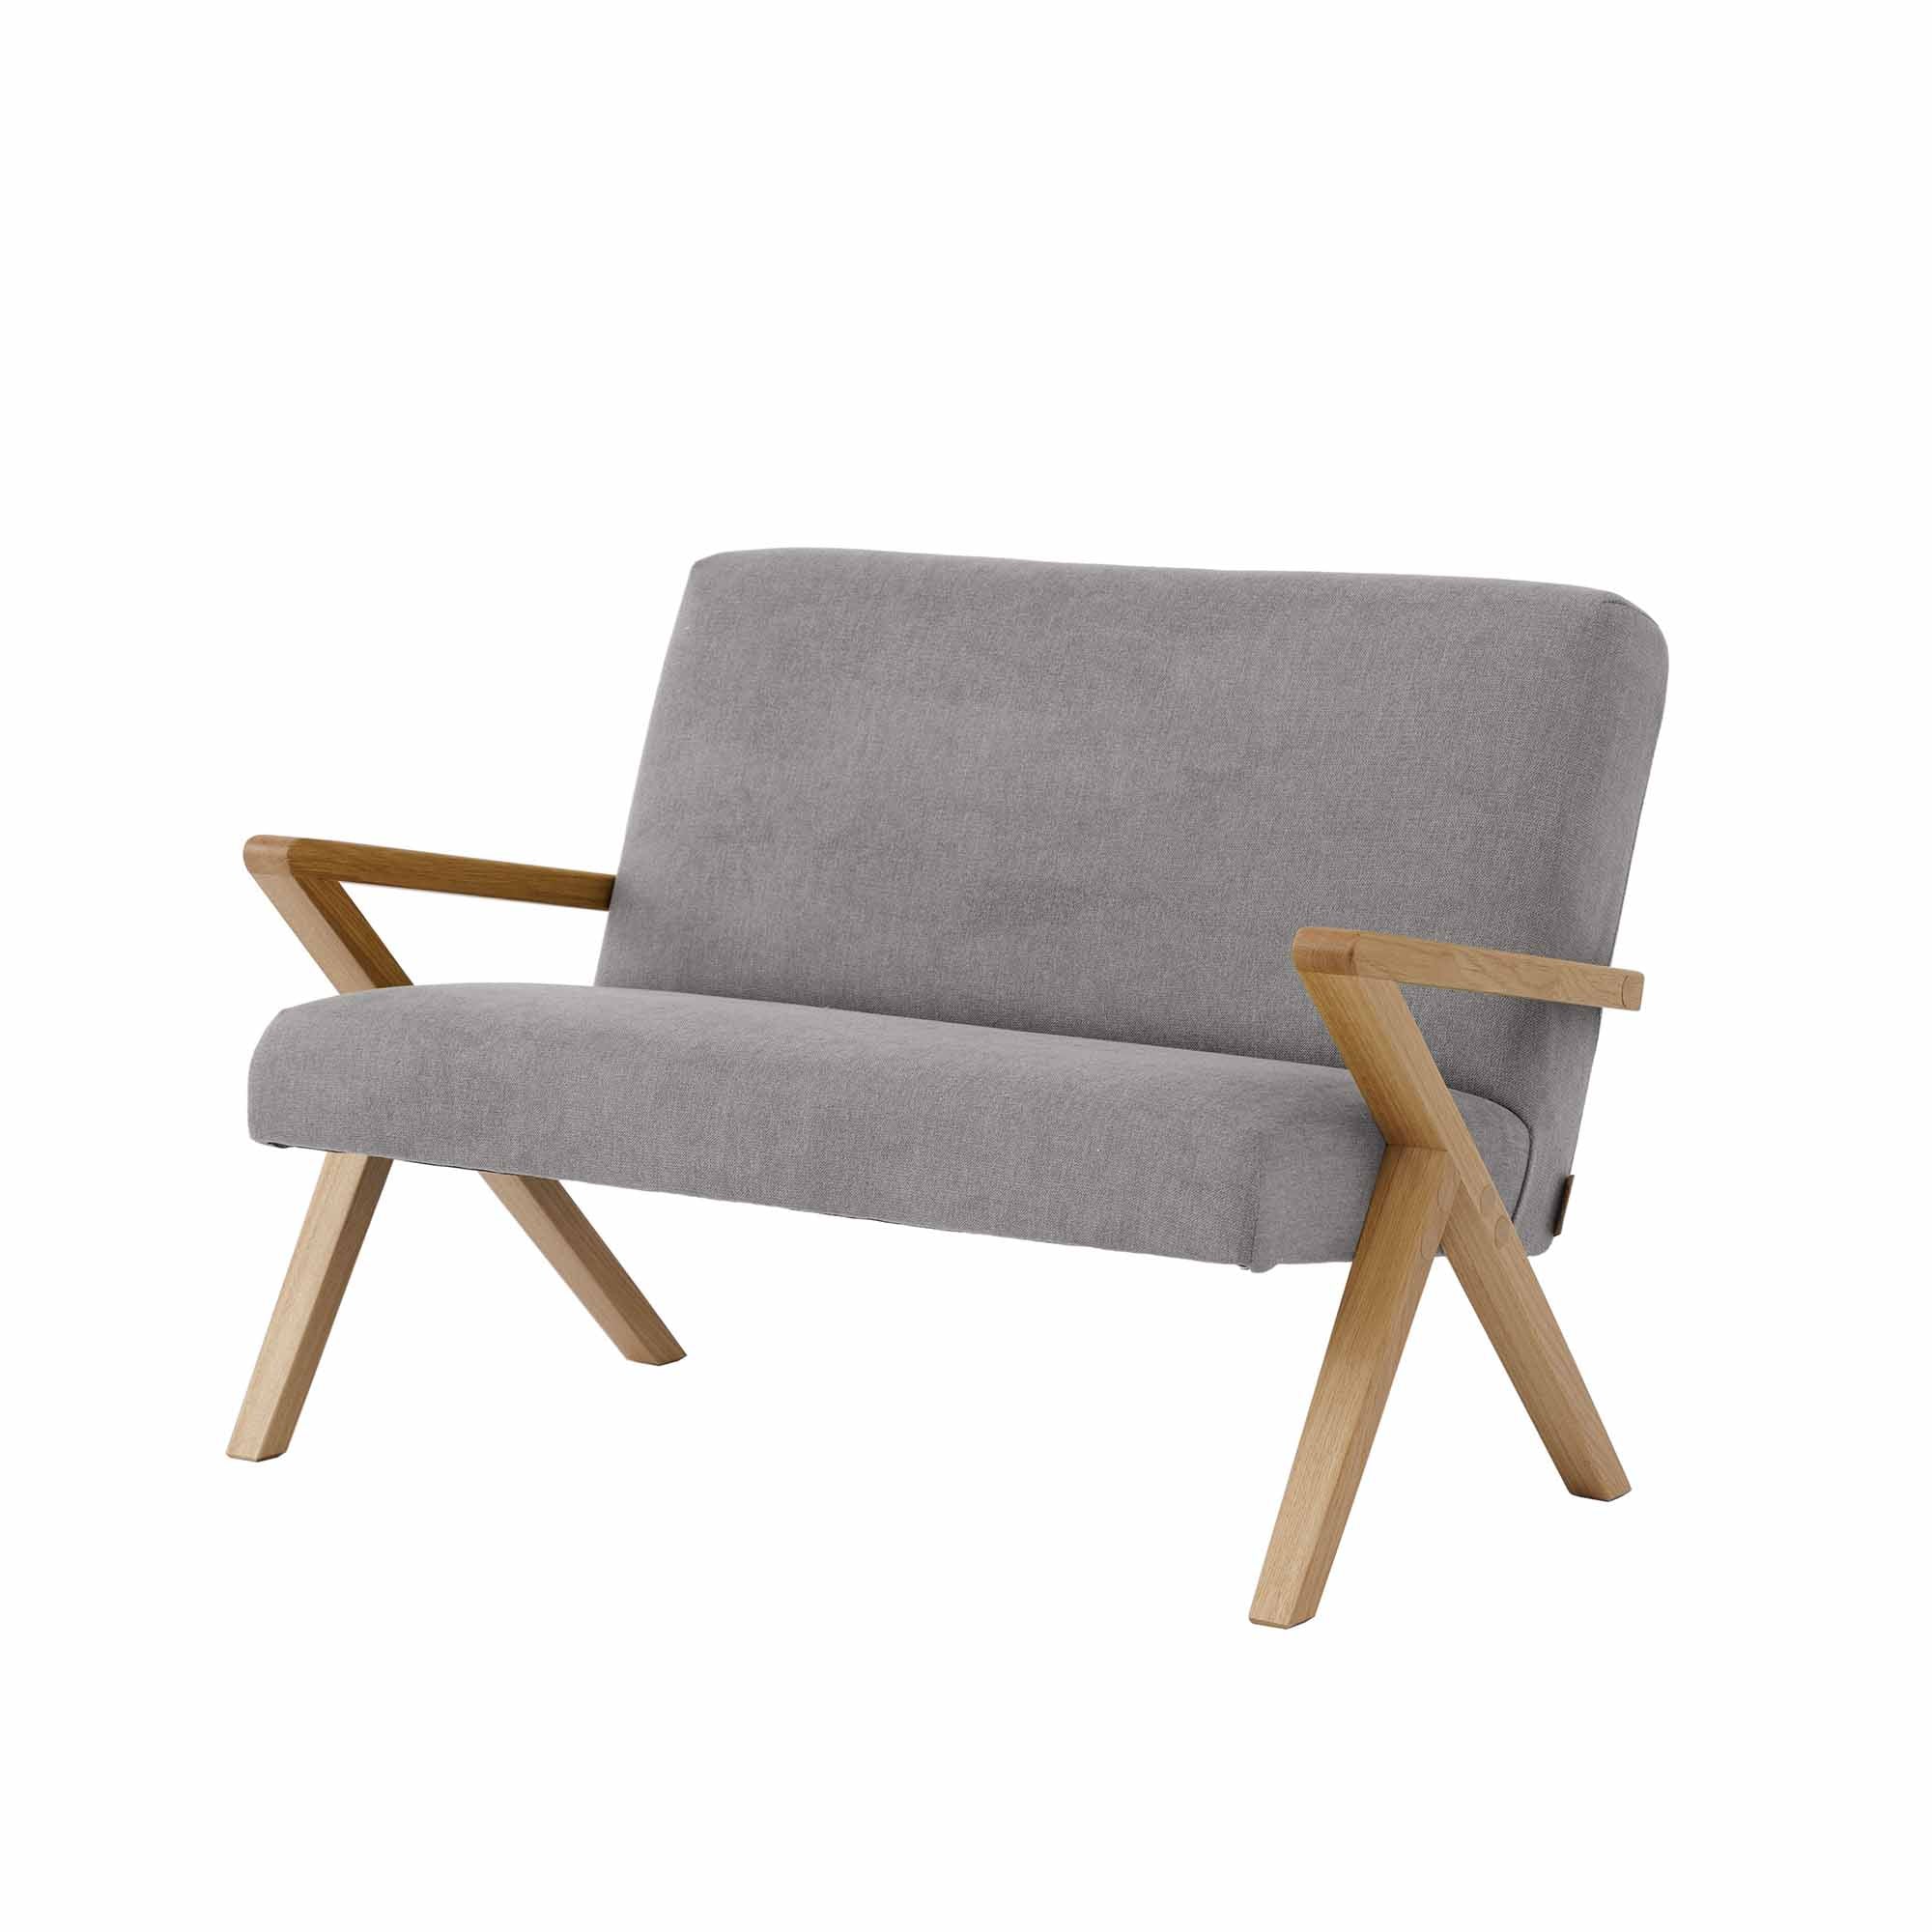 2-Seater Sofa, Beech Wood Frame, Oak Colour grey gabric, half-side view